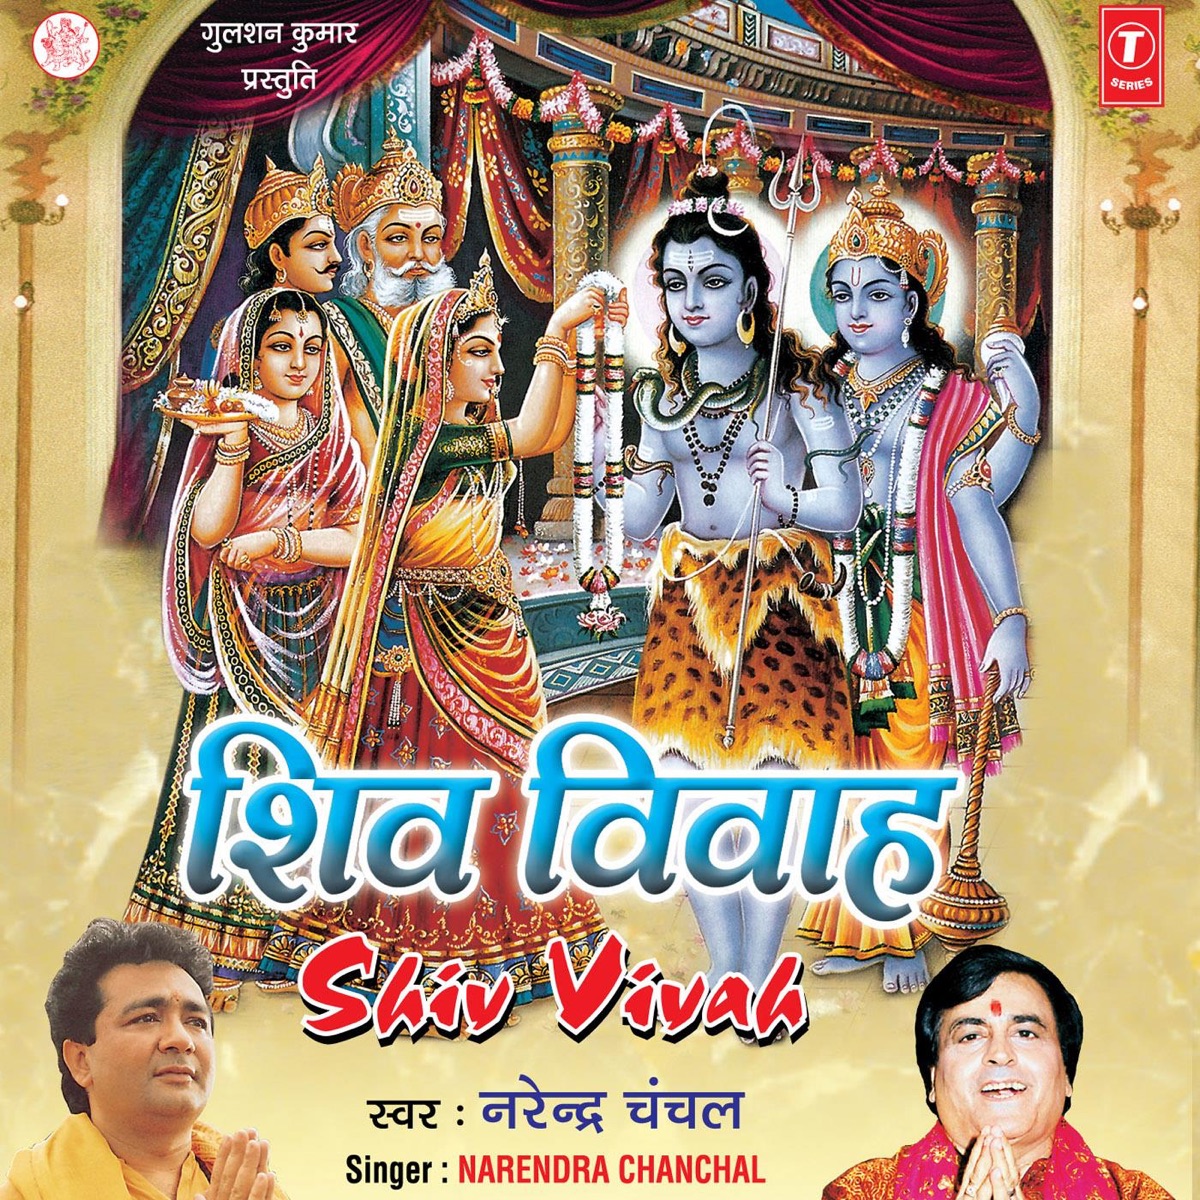 Shiv vivah by narendra chanchal